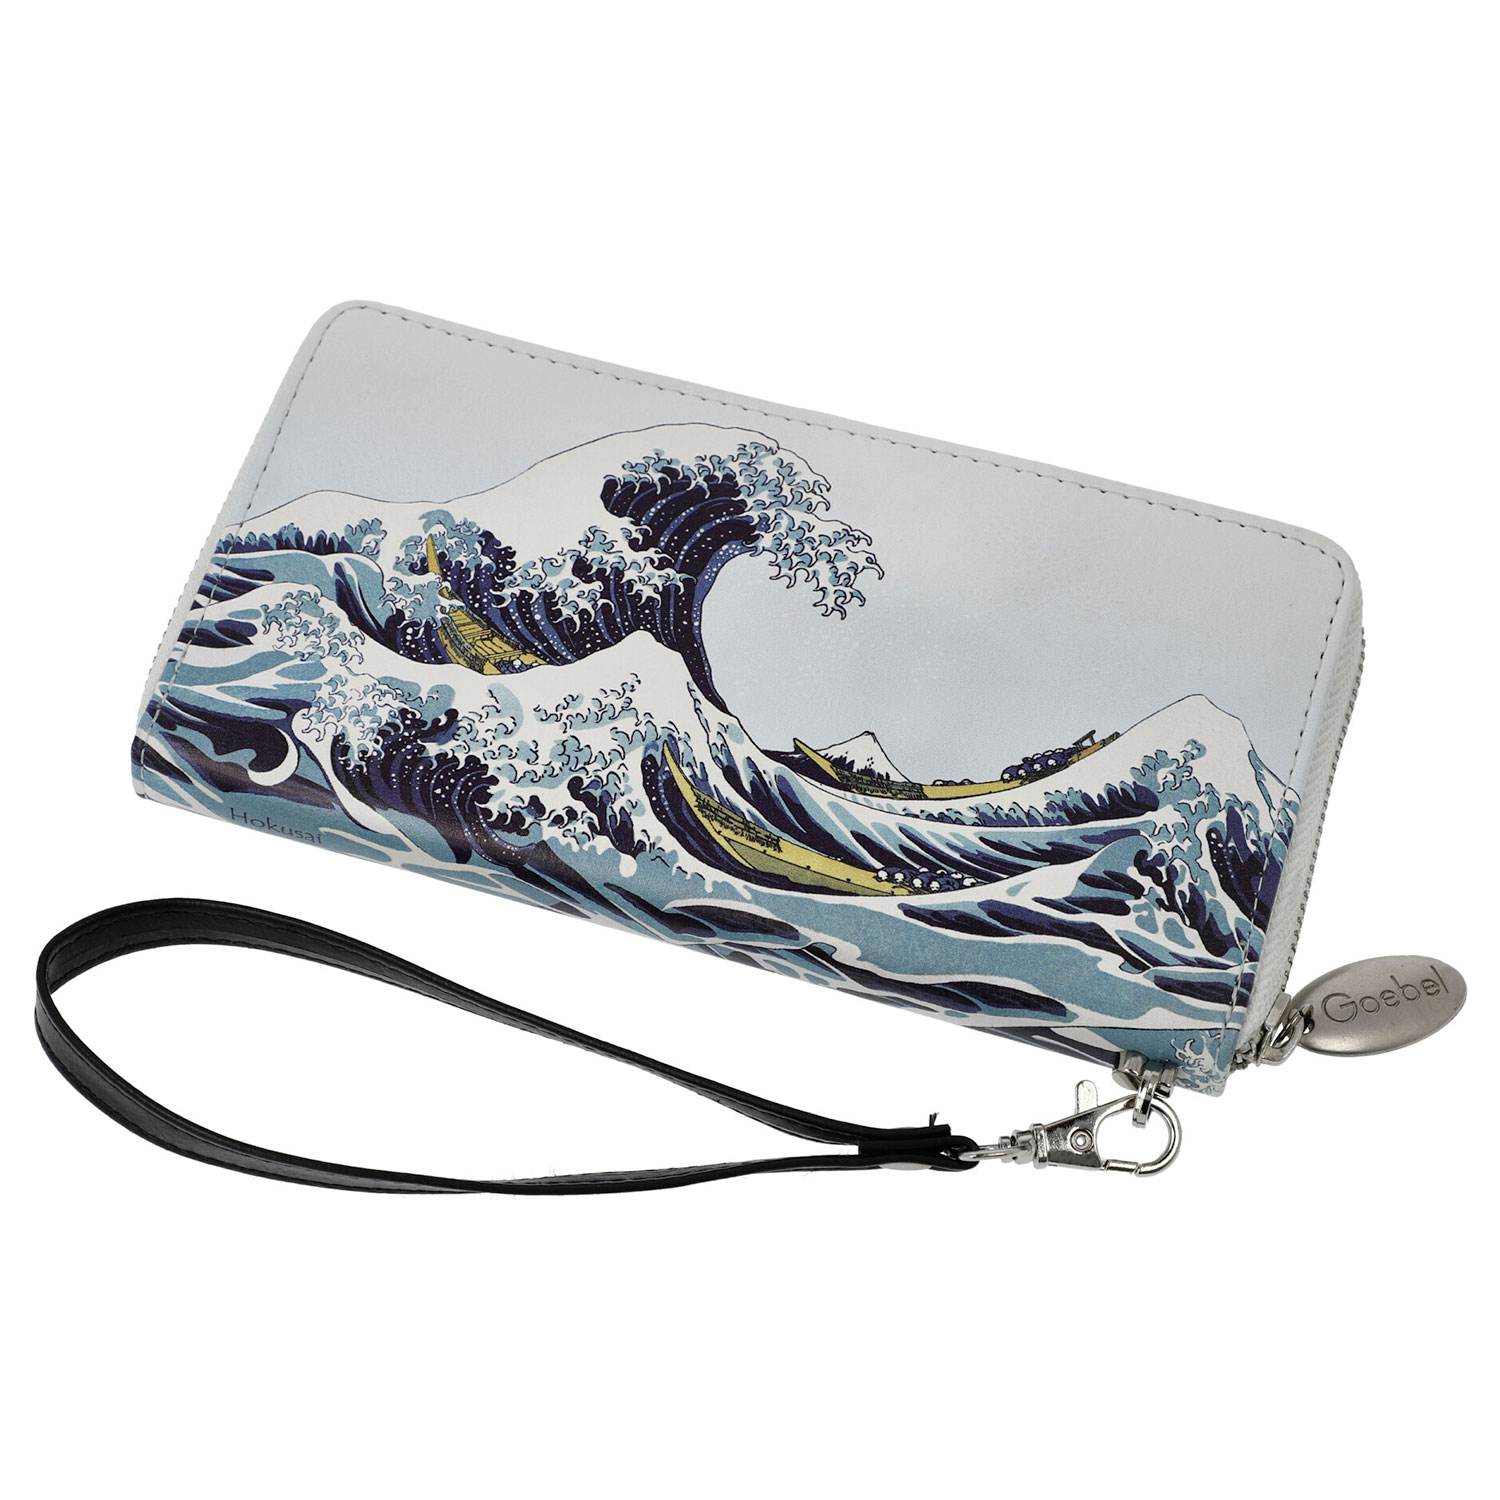 Hokusai wallet - The Great Wave of Kanagawa